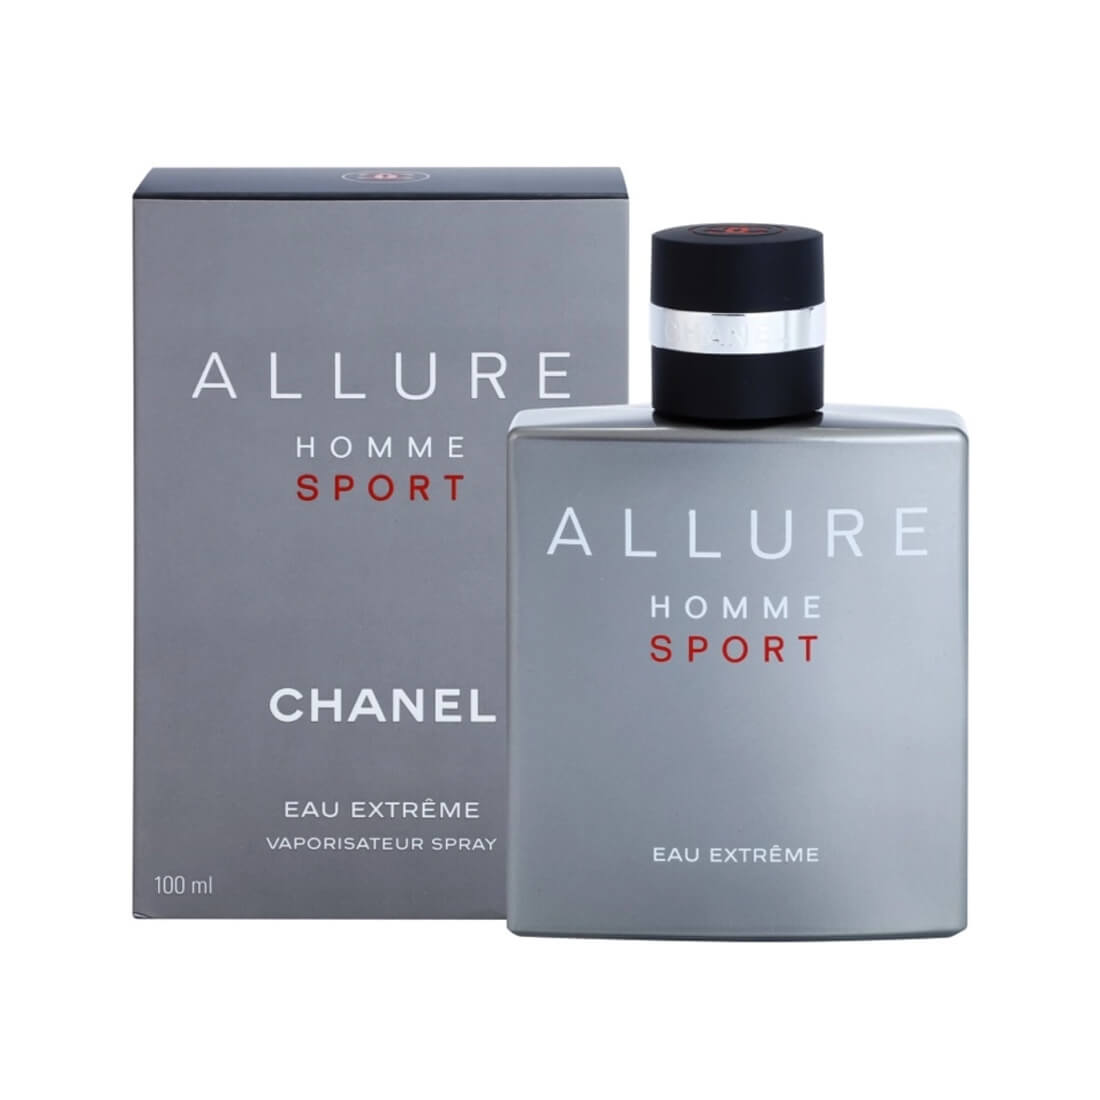 Allure Homme Sport Eau Extreme -150ml - Chanel